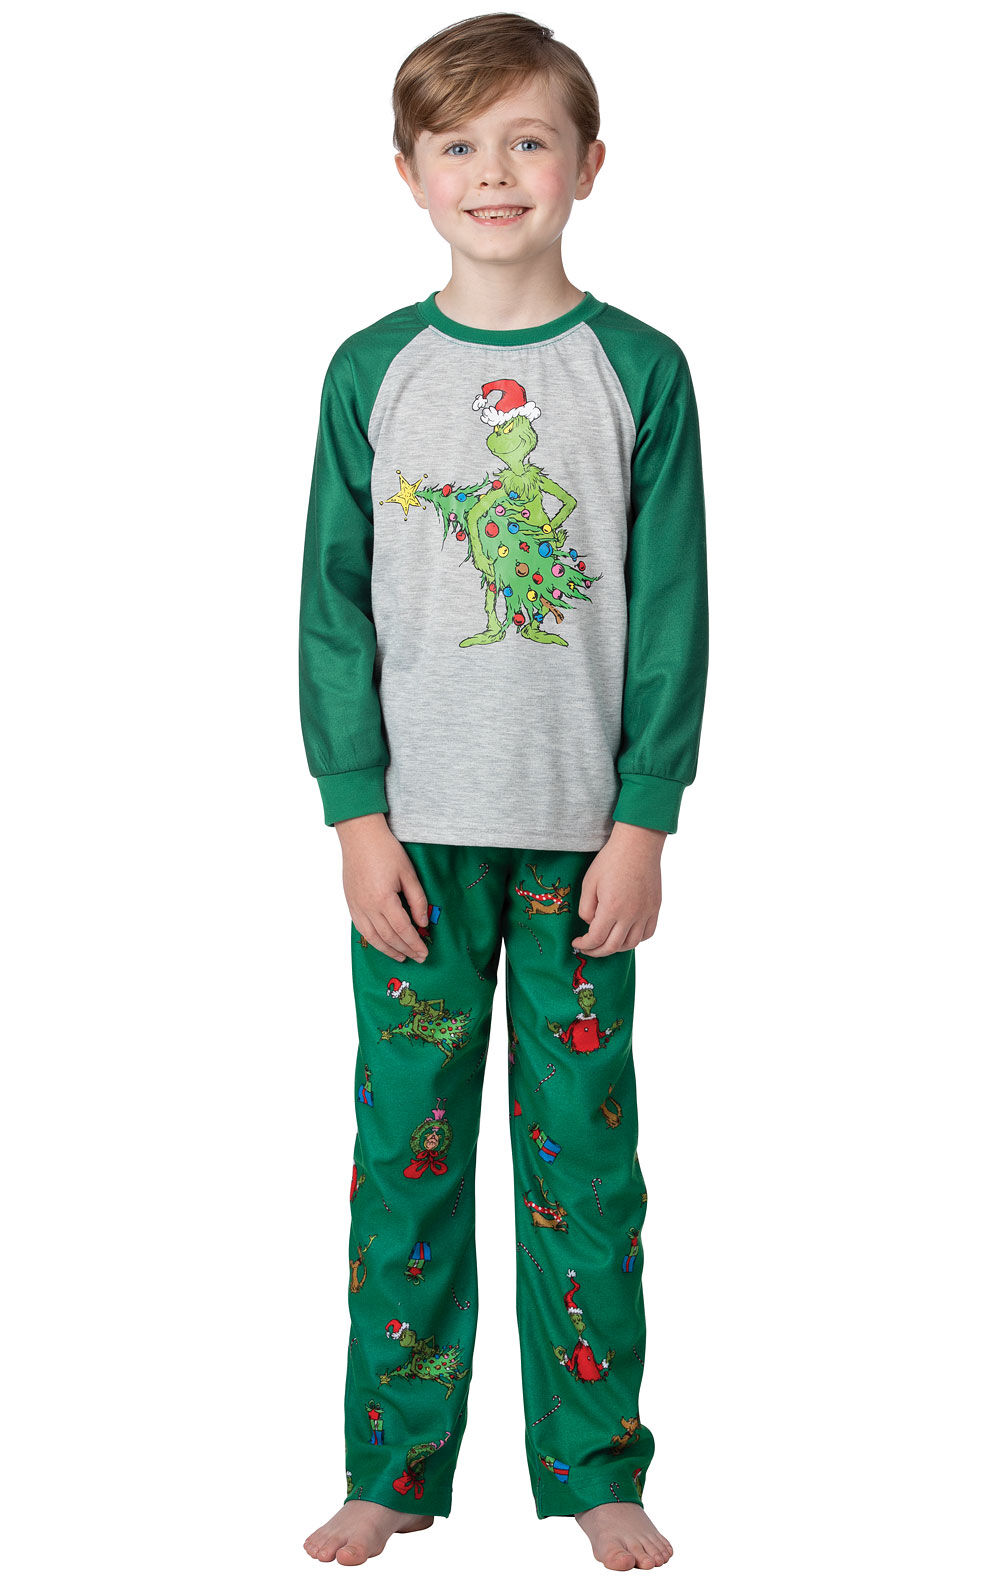 Green, M 8 The Grinch Big Boys & Girls Unisex Fleece Pajama Set 